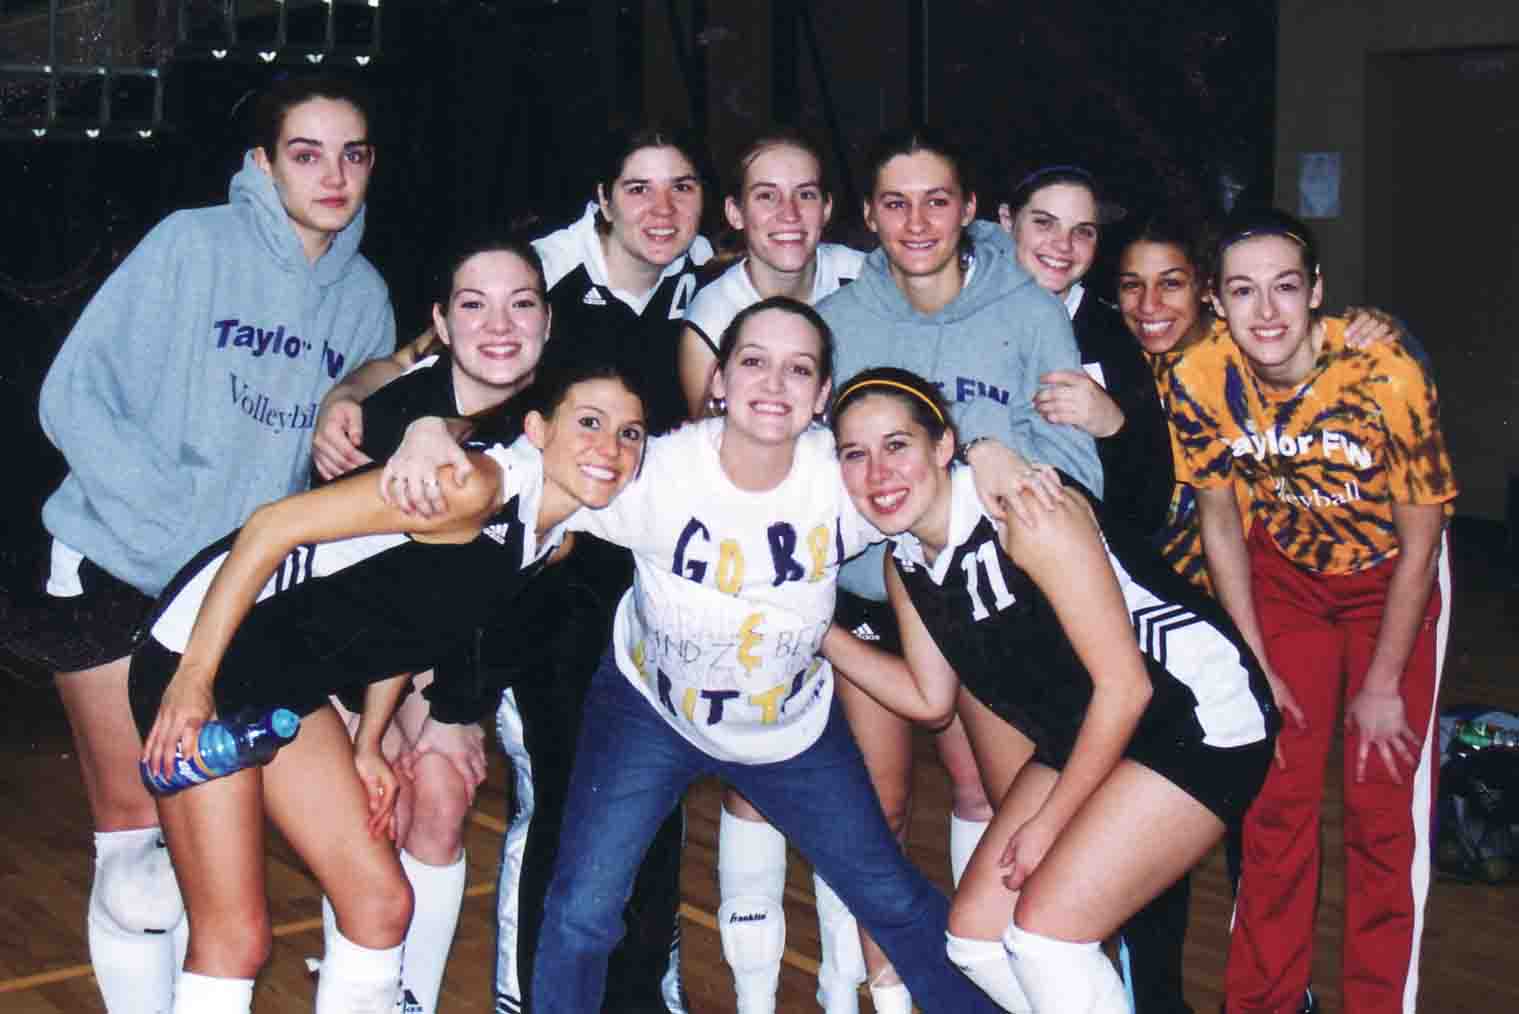 2004 team photo